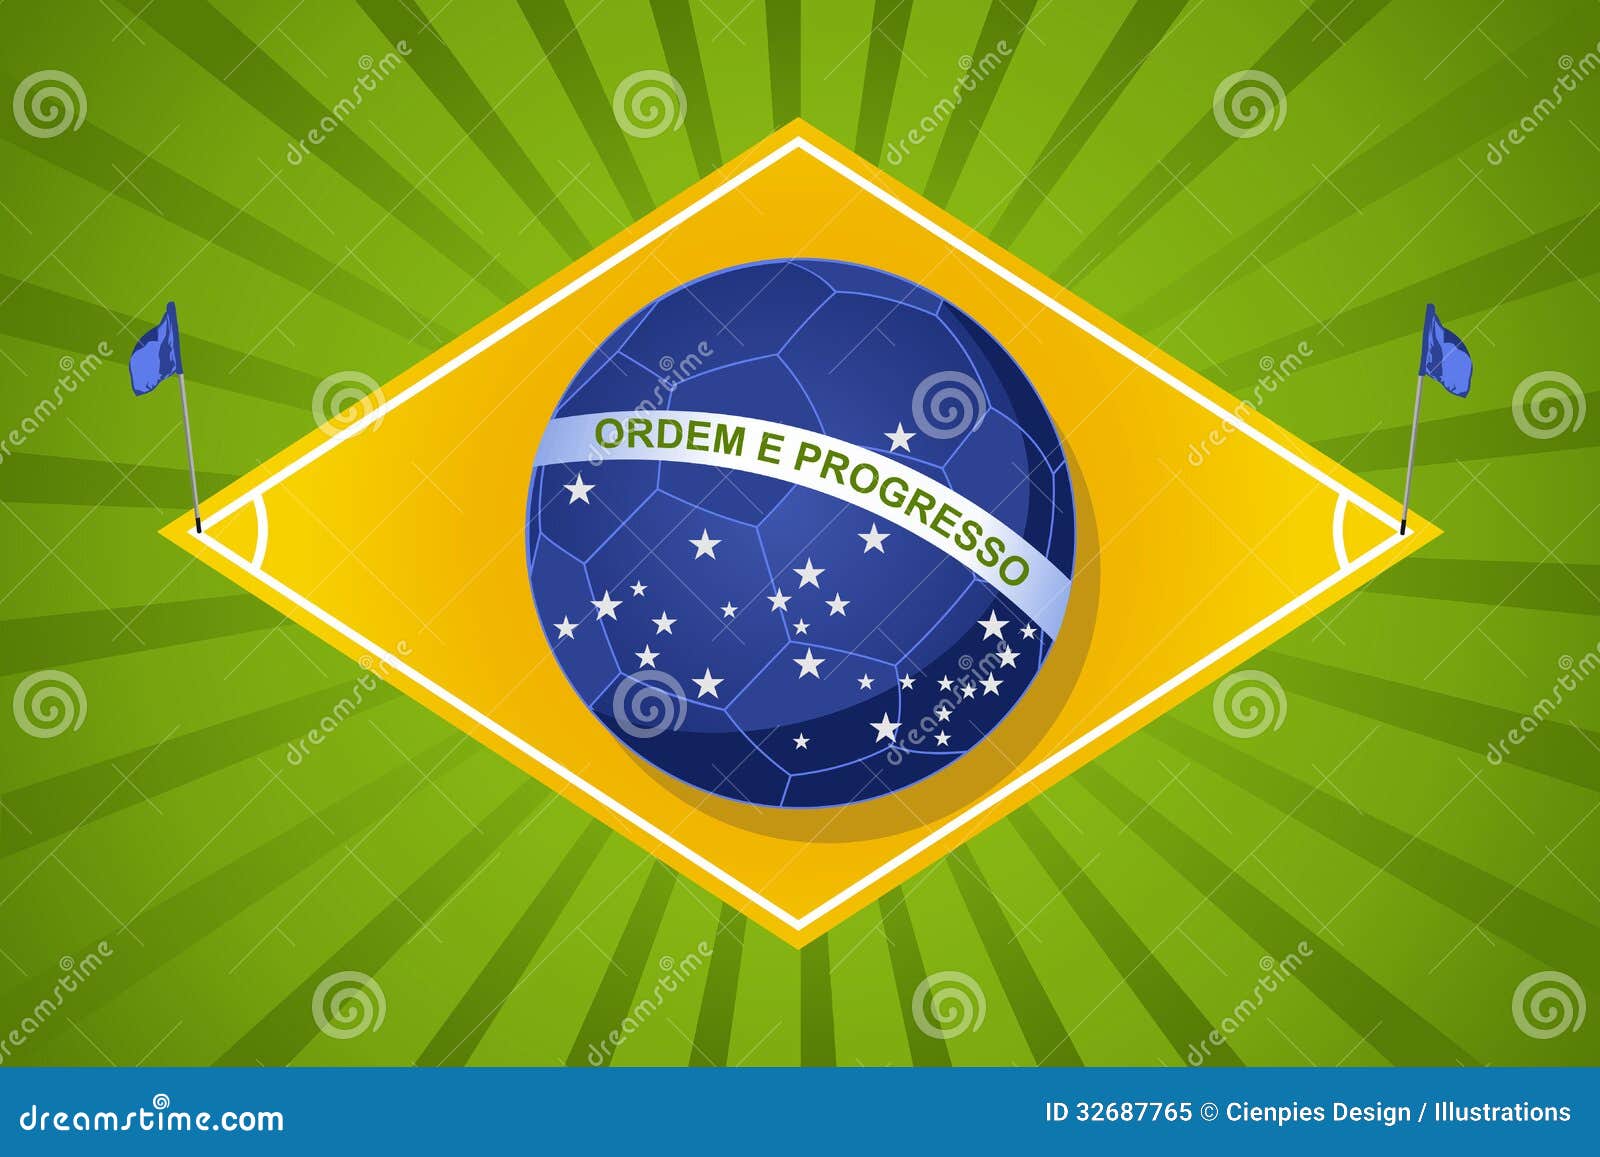 Brazil Powerpoint Templates Free